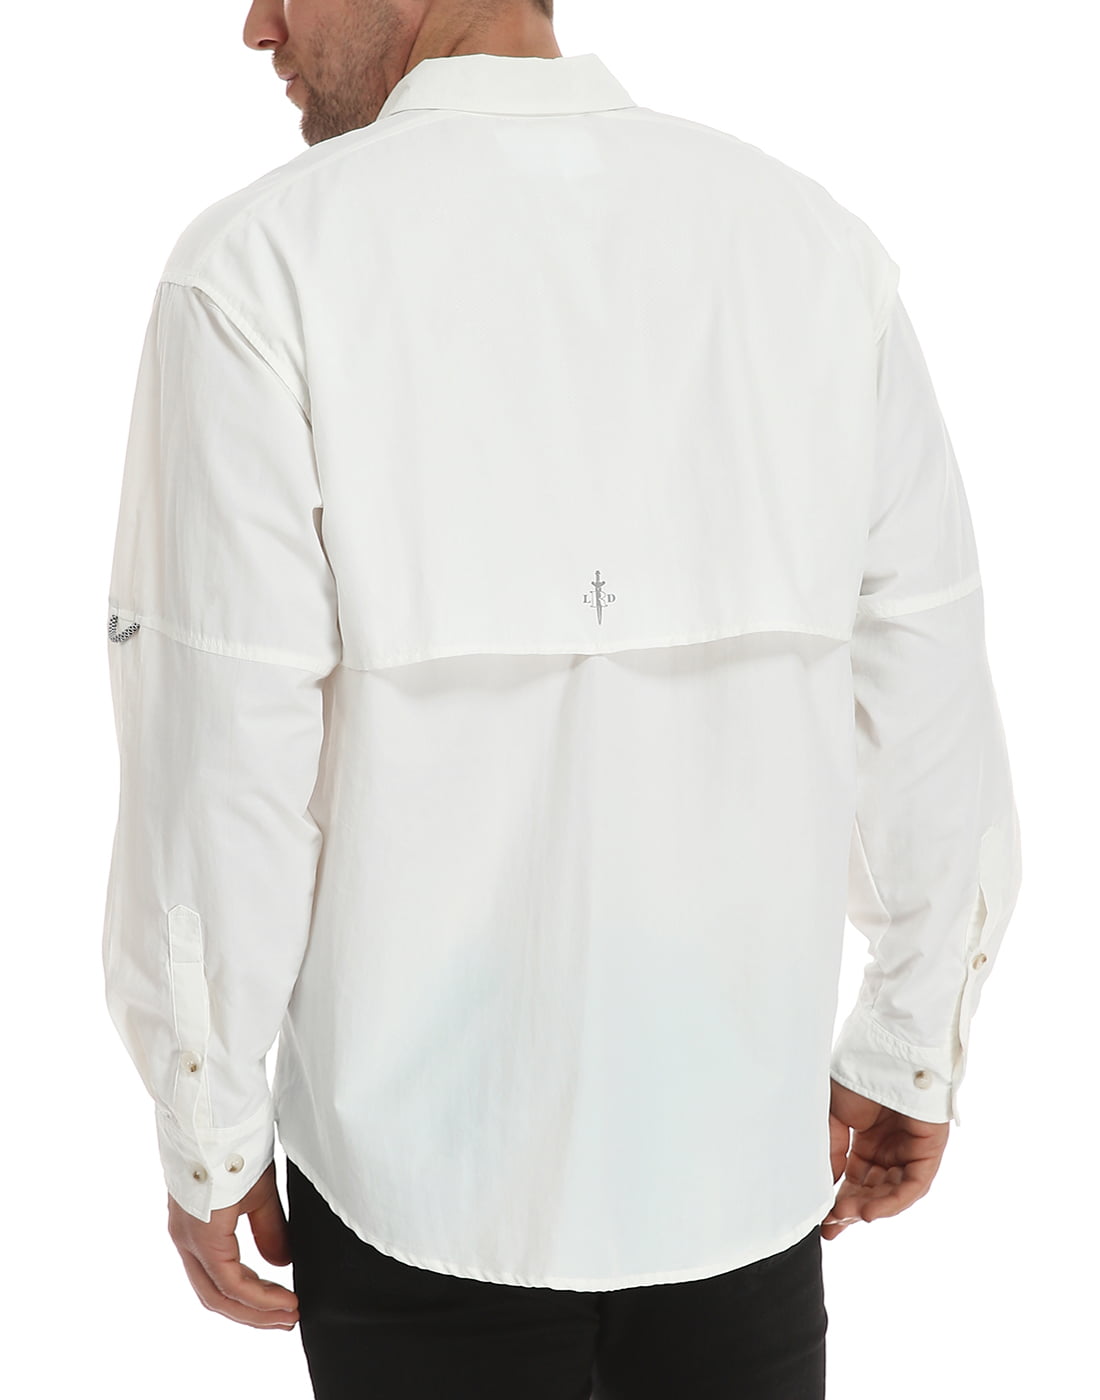 LRD Men's UPF 30 Long Sleeve Button Down Fishing Shirts White XL